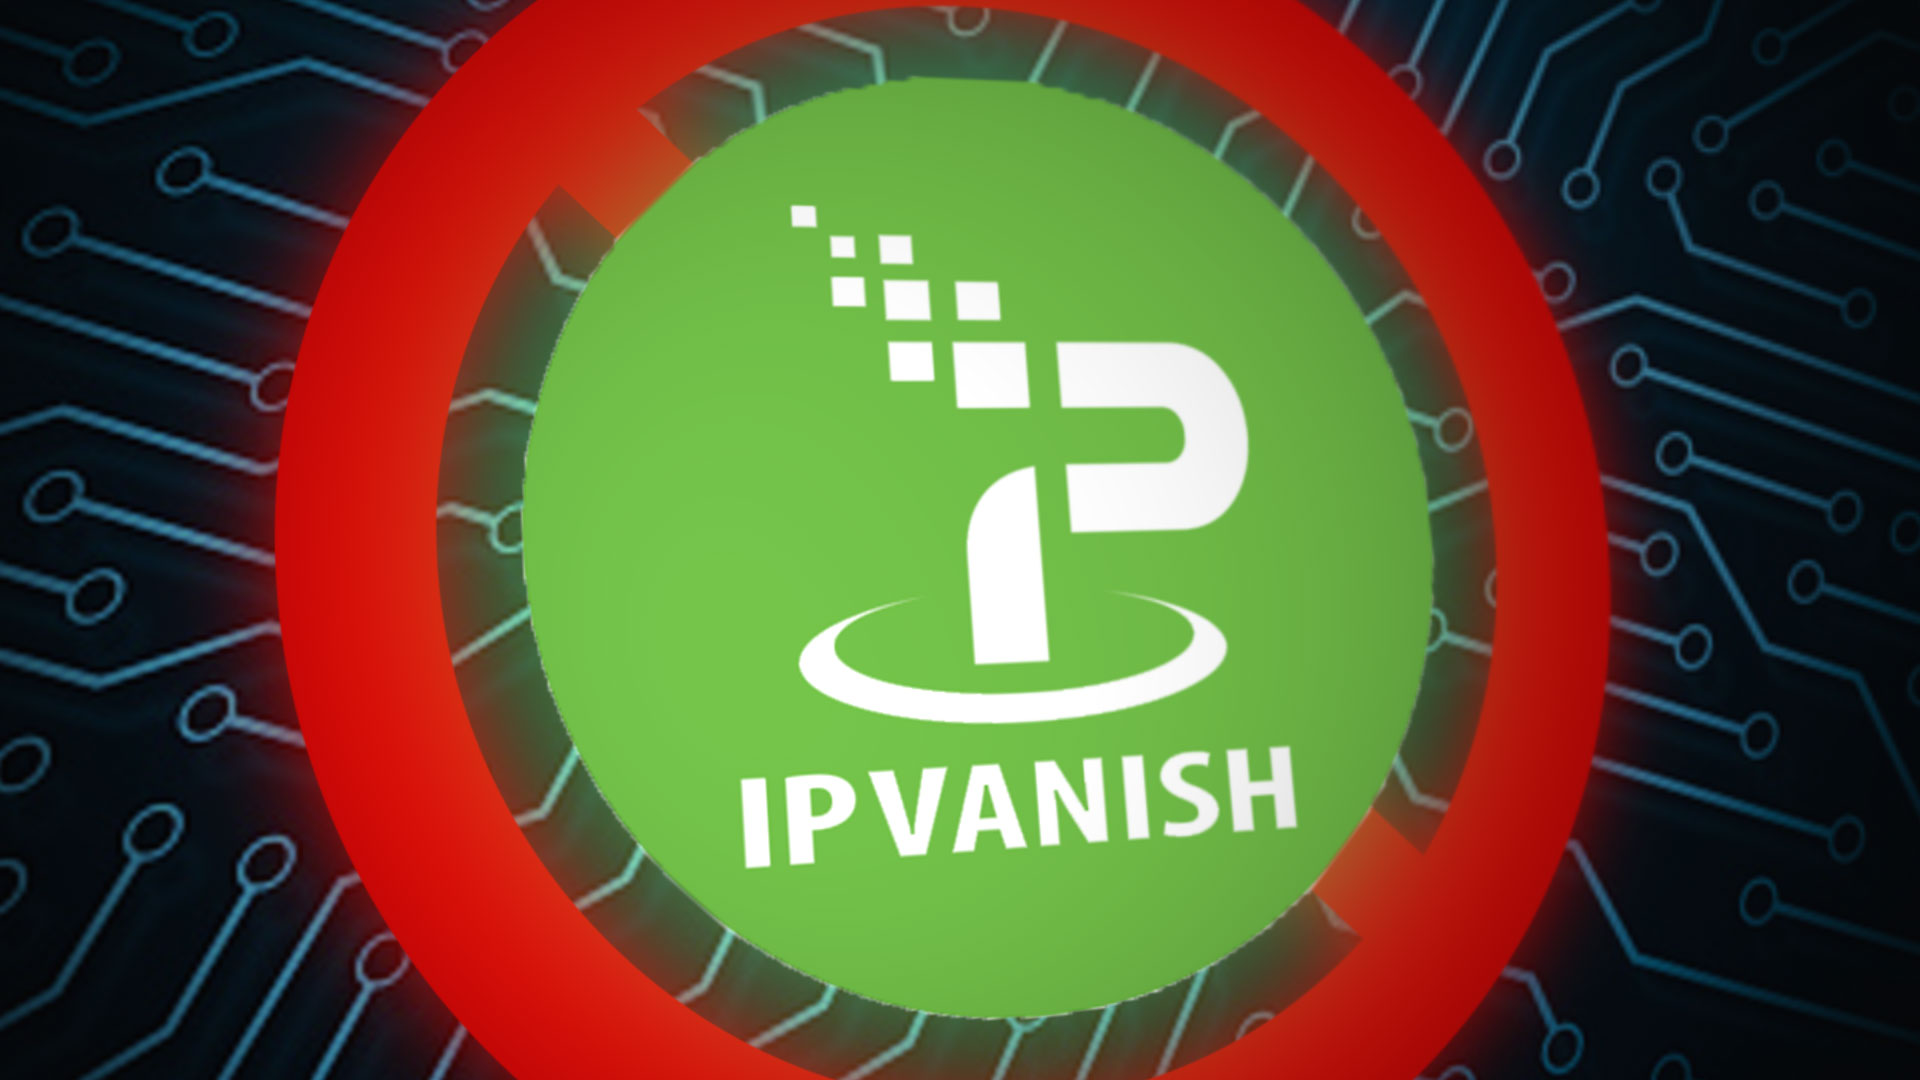 ipvanish not connecting on firestick